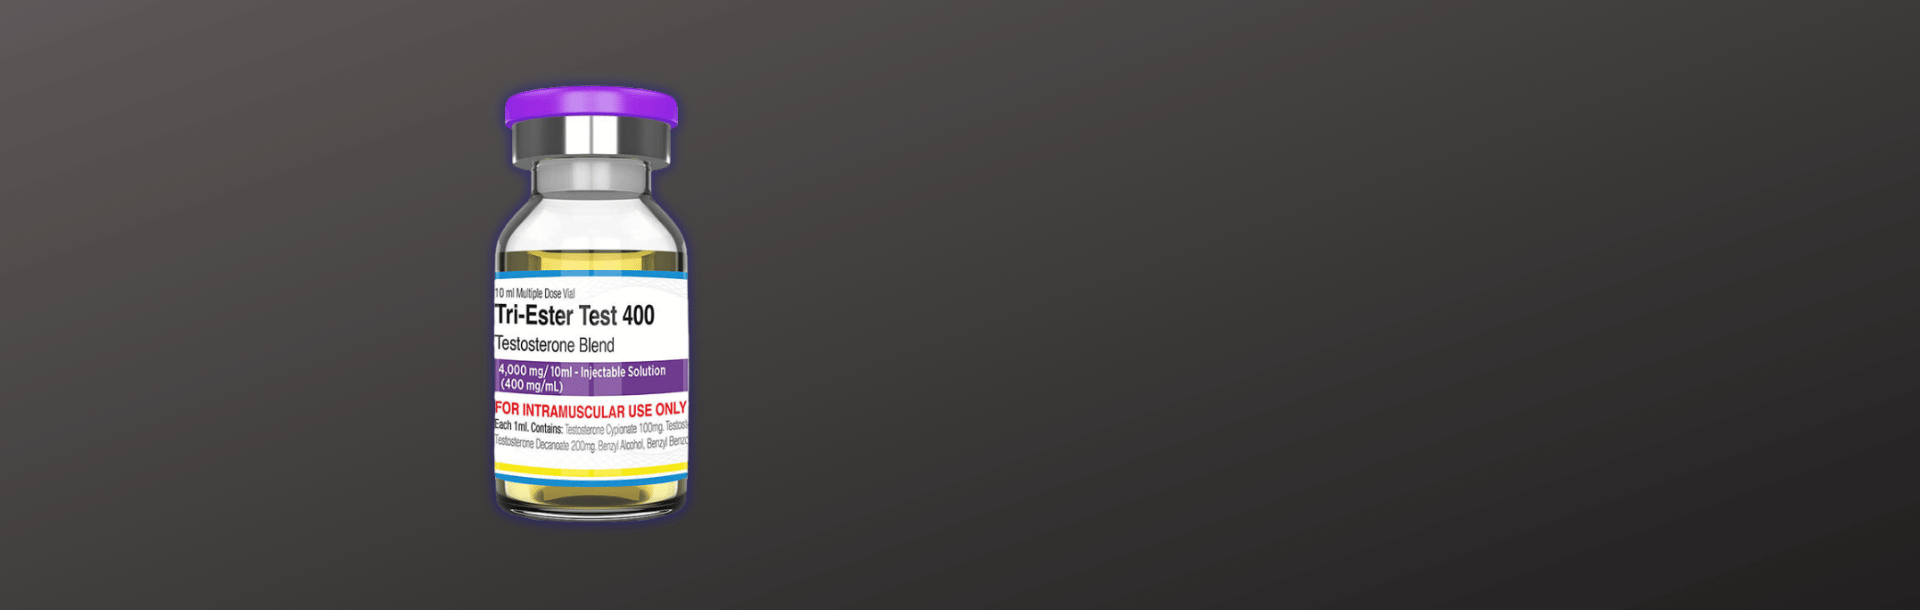 pharmaqo-tri-ester-test-400